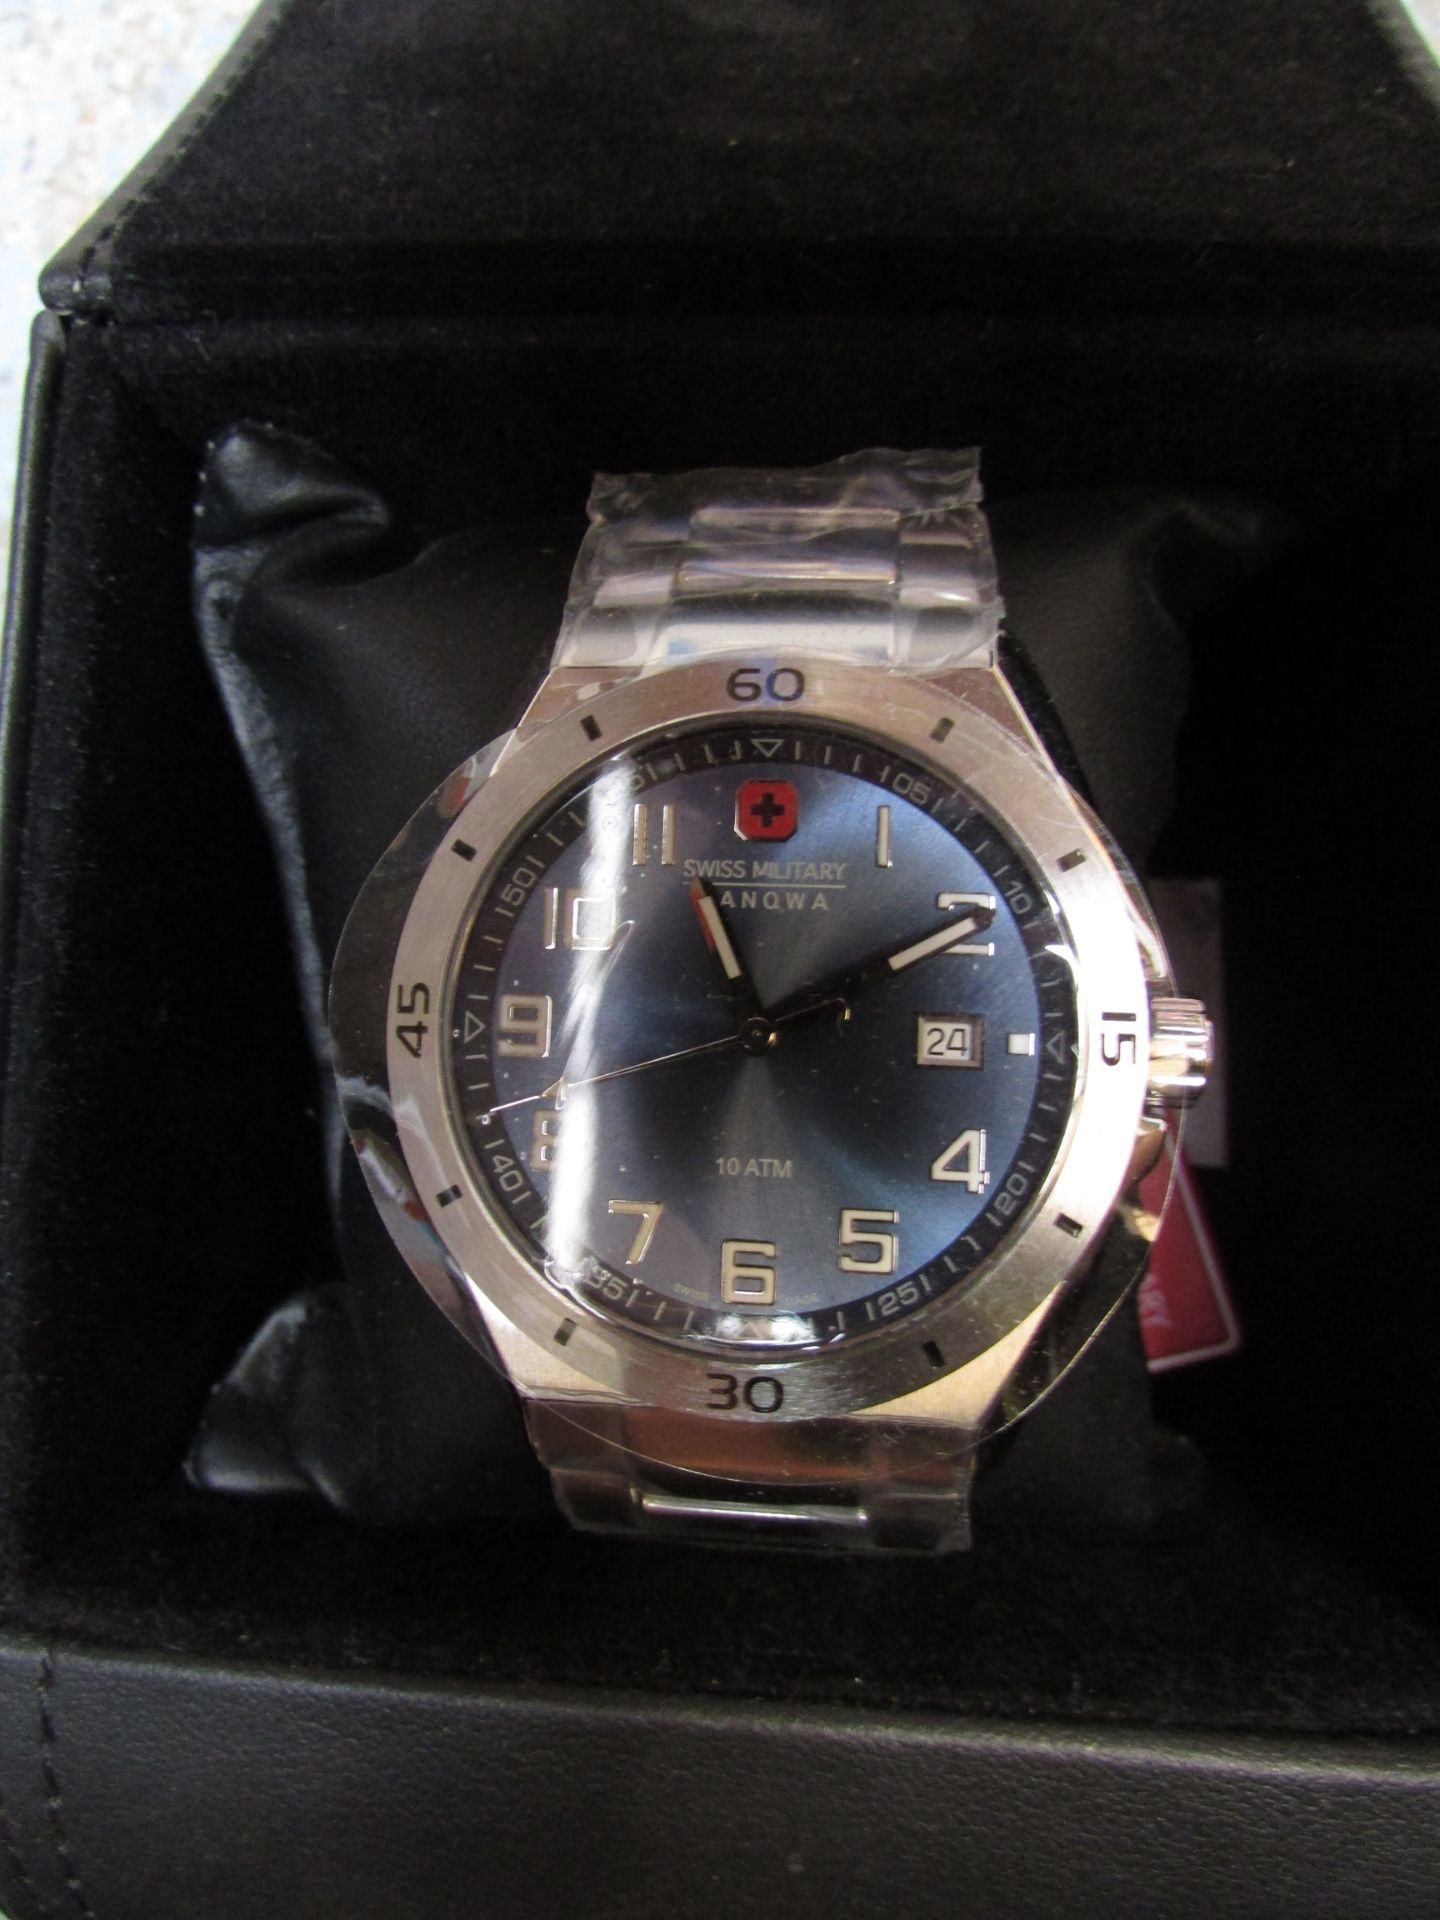 Swiss Military Hanowa Mens Stainless Steel Watch Model Number 06-5190.04.003 - Image 2 of 2